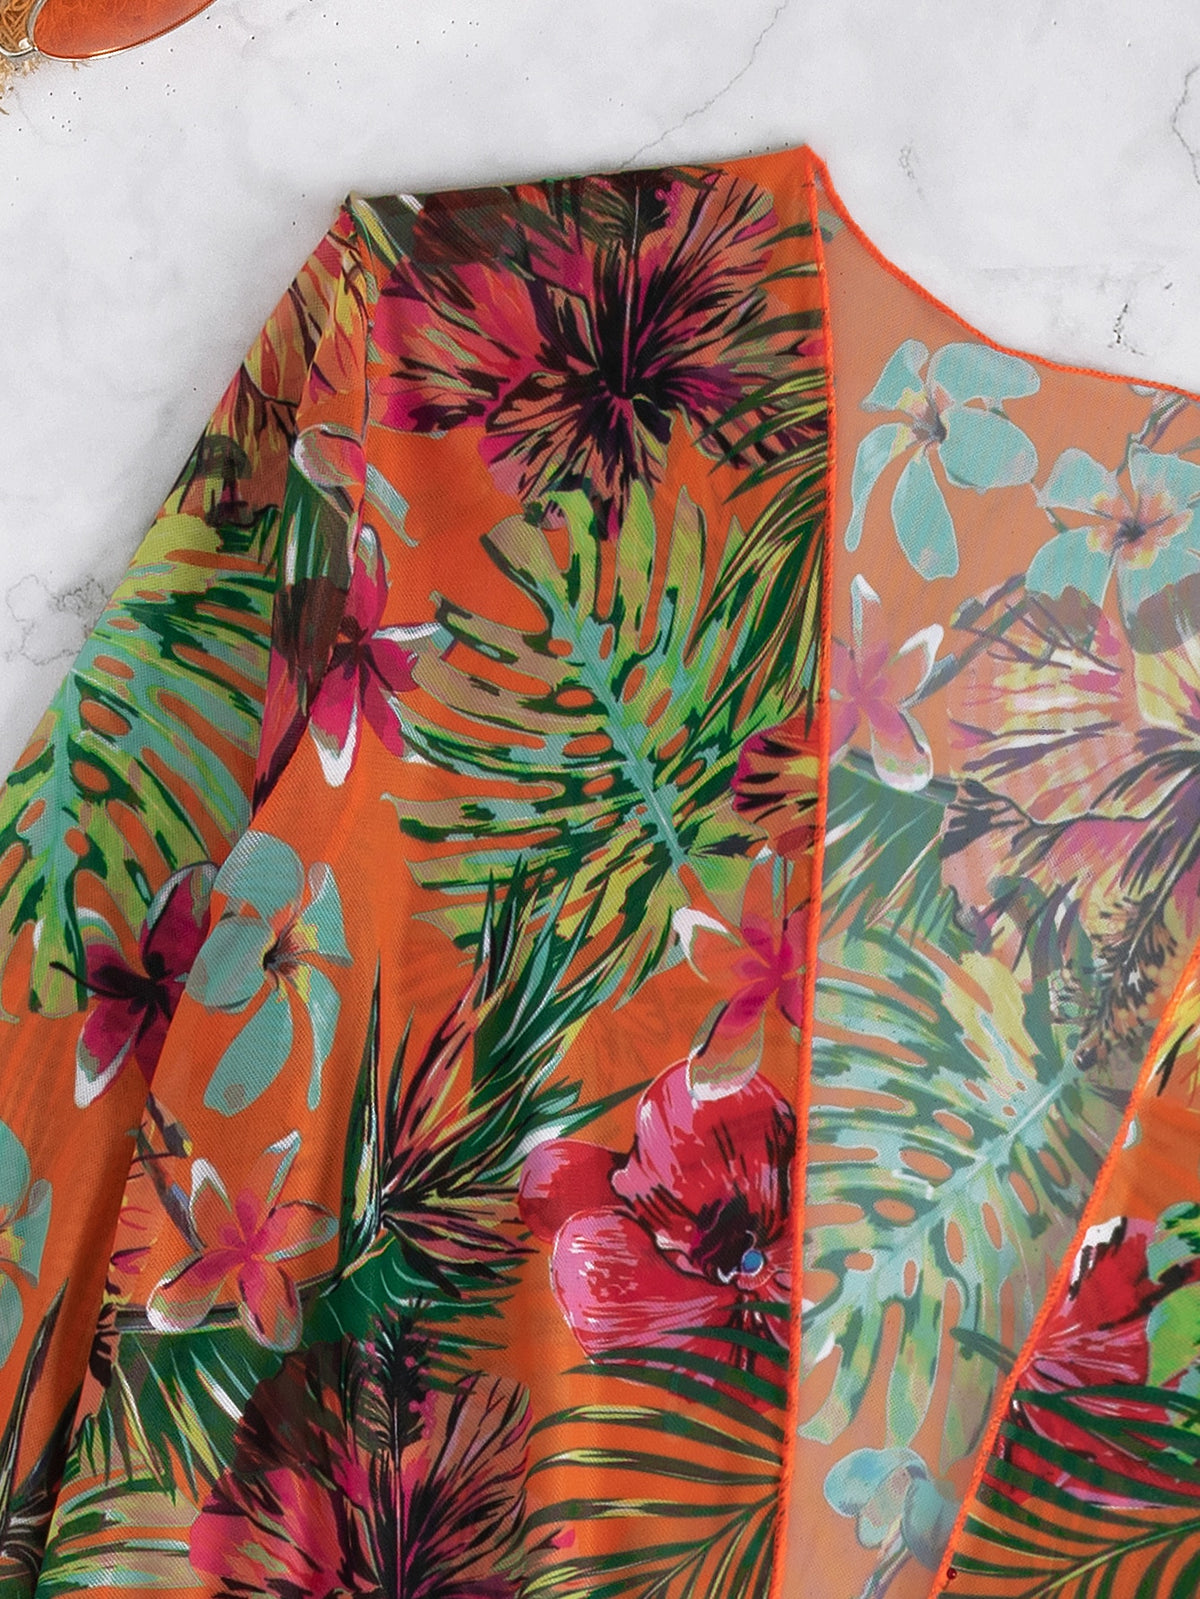 Push Up Bikini Swimsuit plus Kimono In Tropical Print